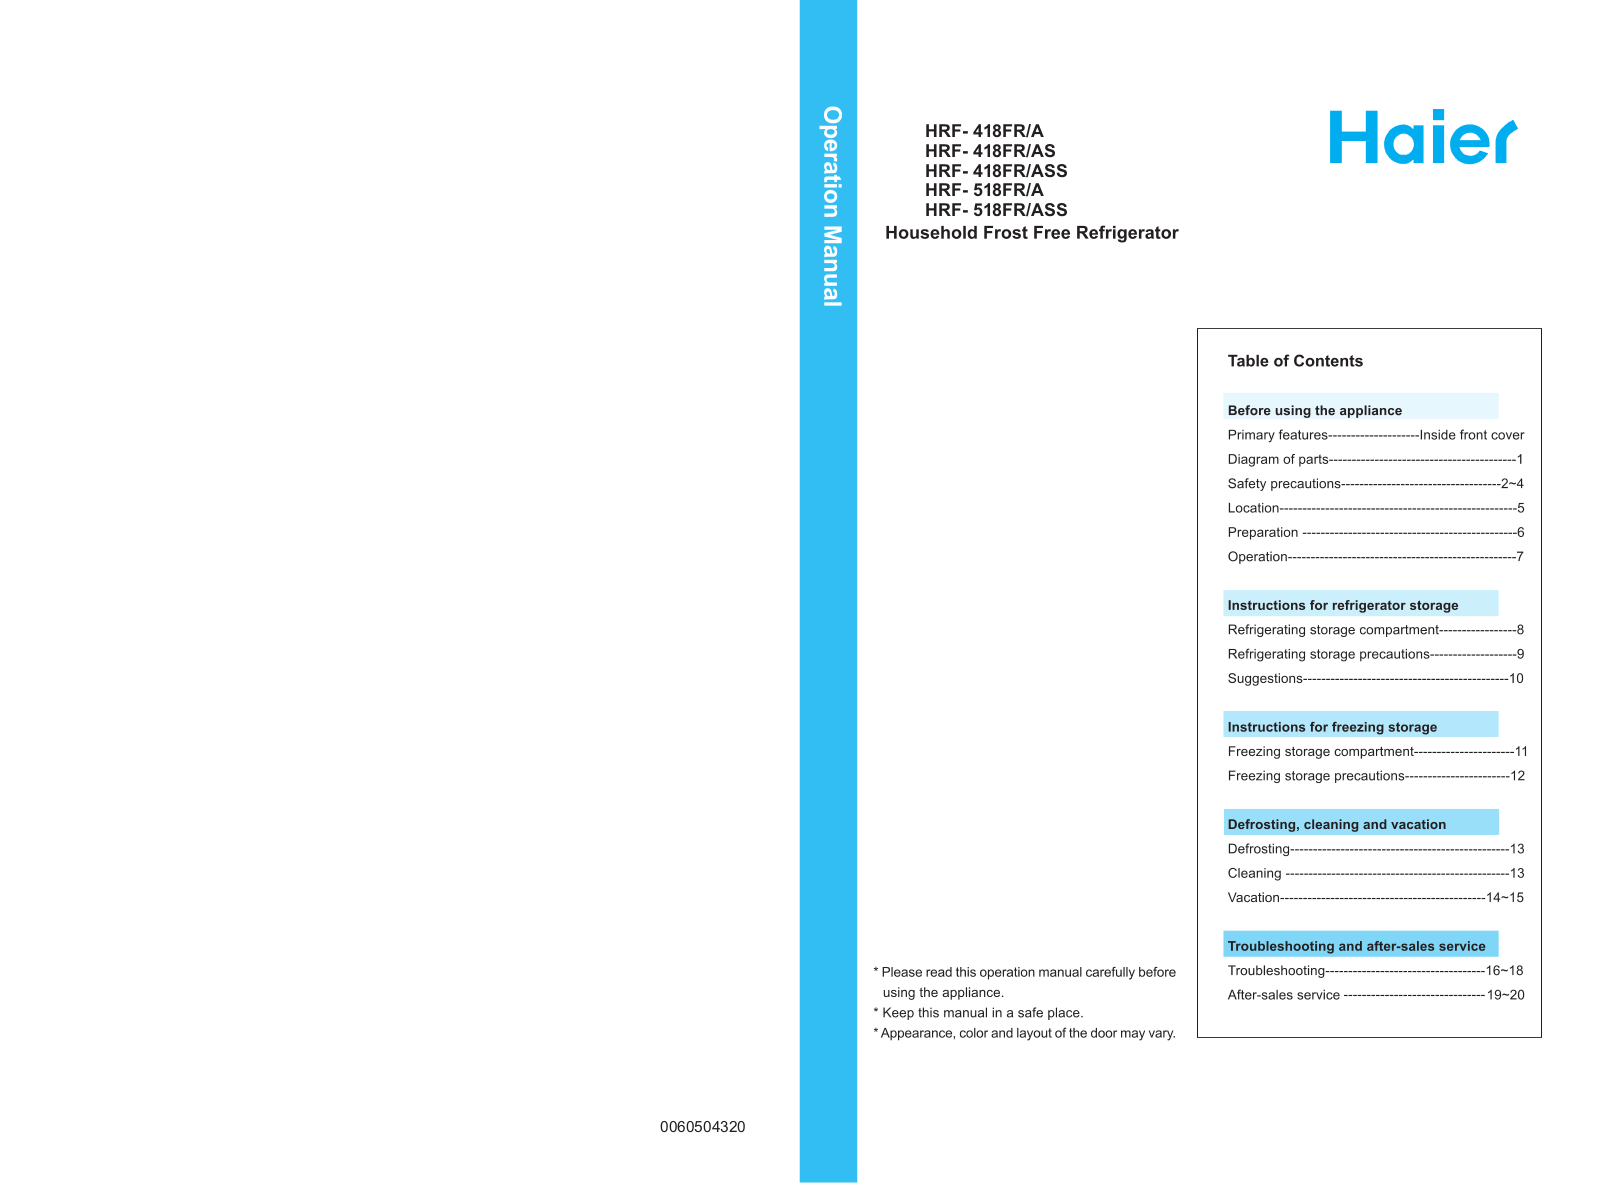 Haier HRF- 418FR-ASS, HRF- 418FR-A, HRF- 418FR-AS, HRF- 518FR-ASS, HRF- 518FR-A User Manual